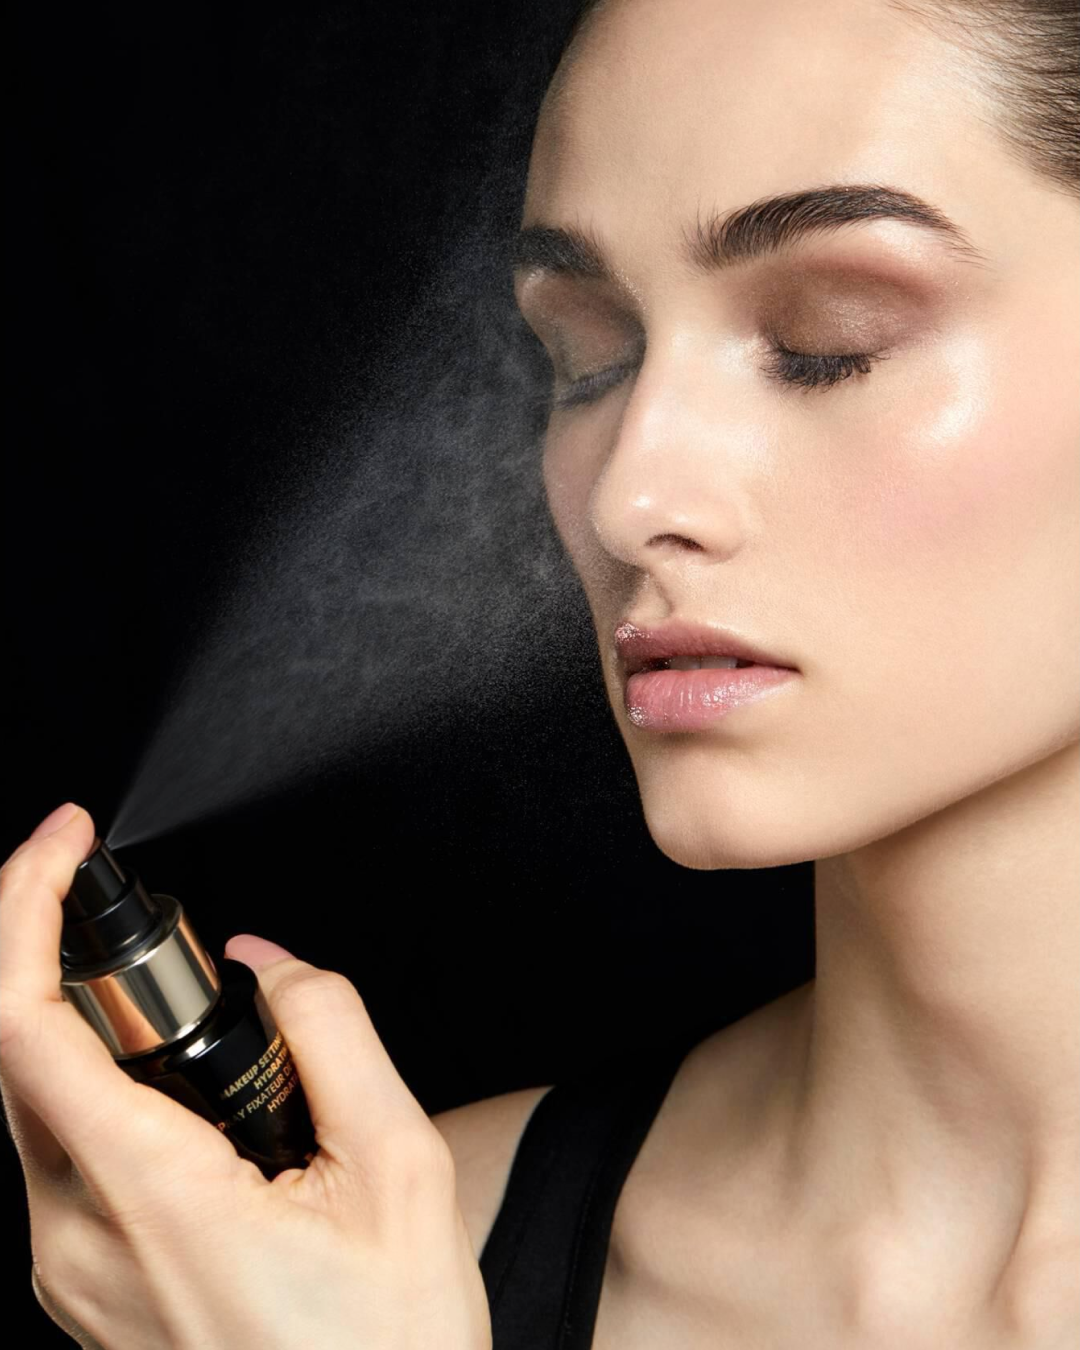 Yves Saint Laurent Top Secrets Glow Perfecting Make up Setting Spray (100ml) - Best Buy World Philippines